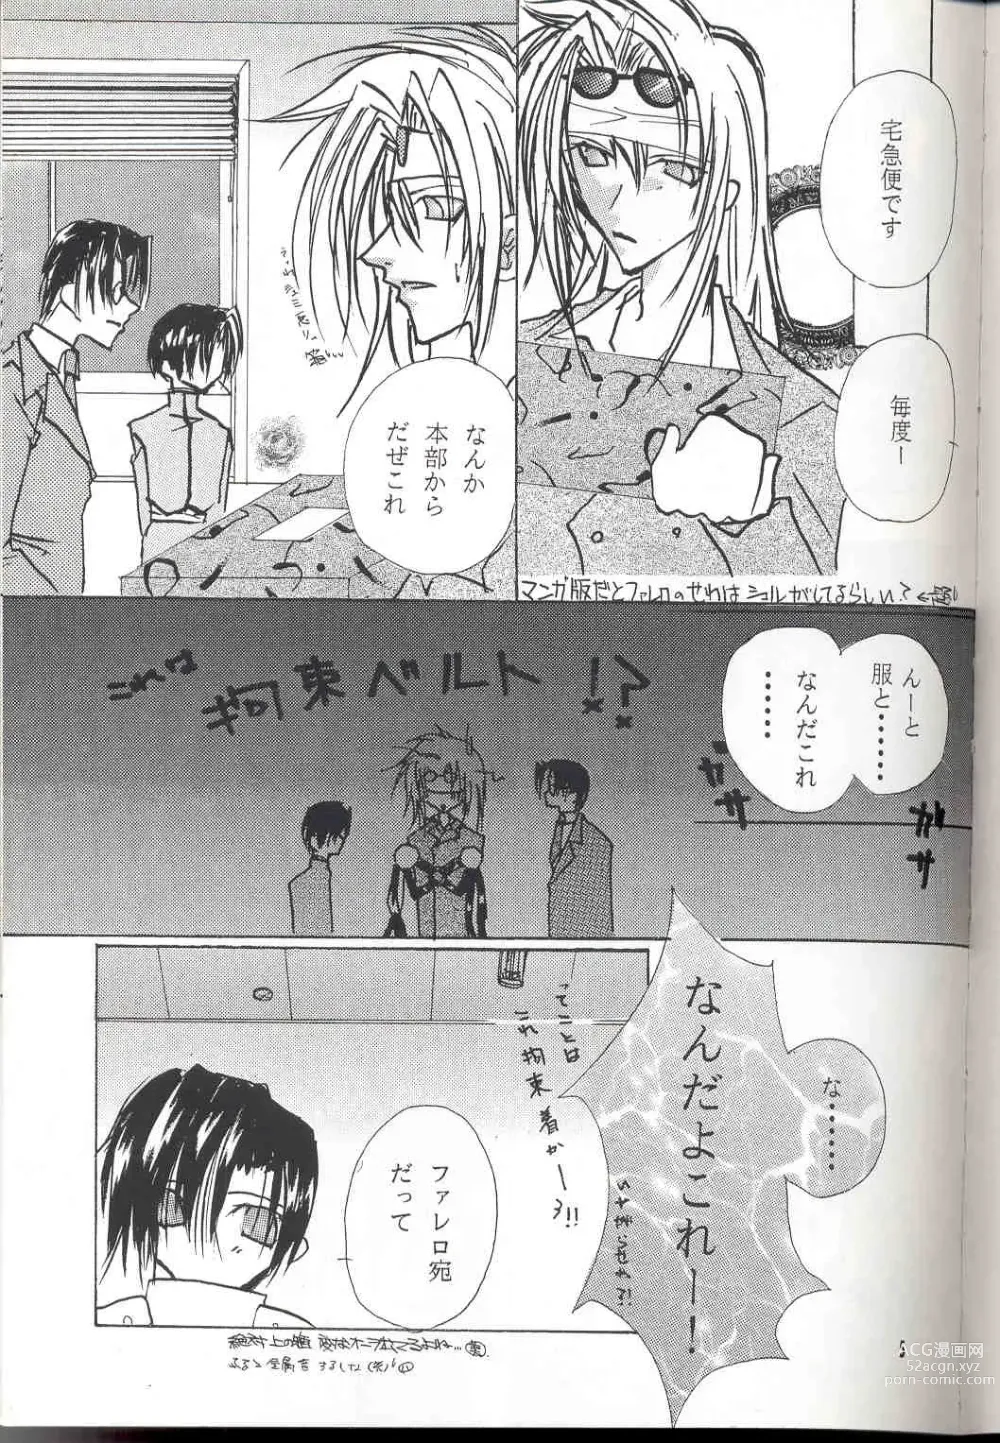 Page 4 of doujinshi Sentimental